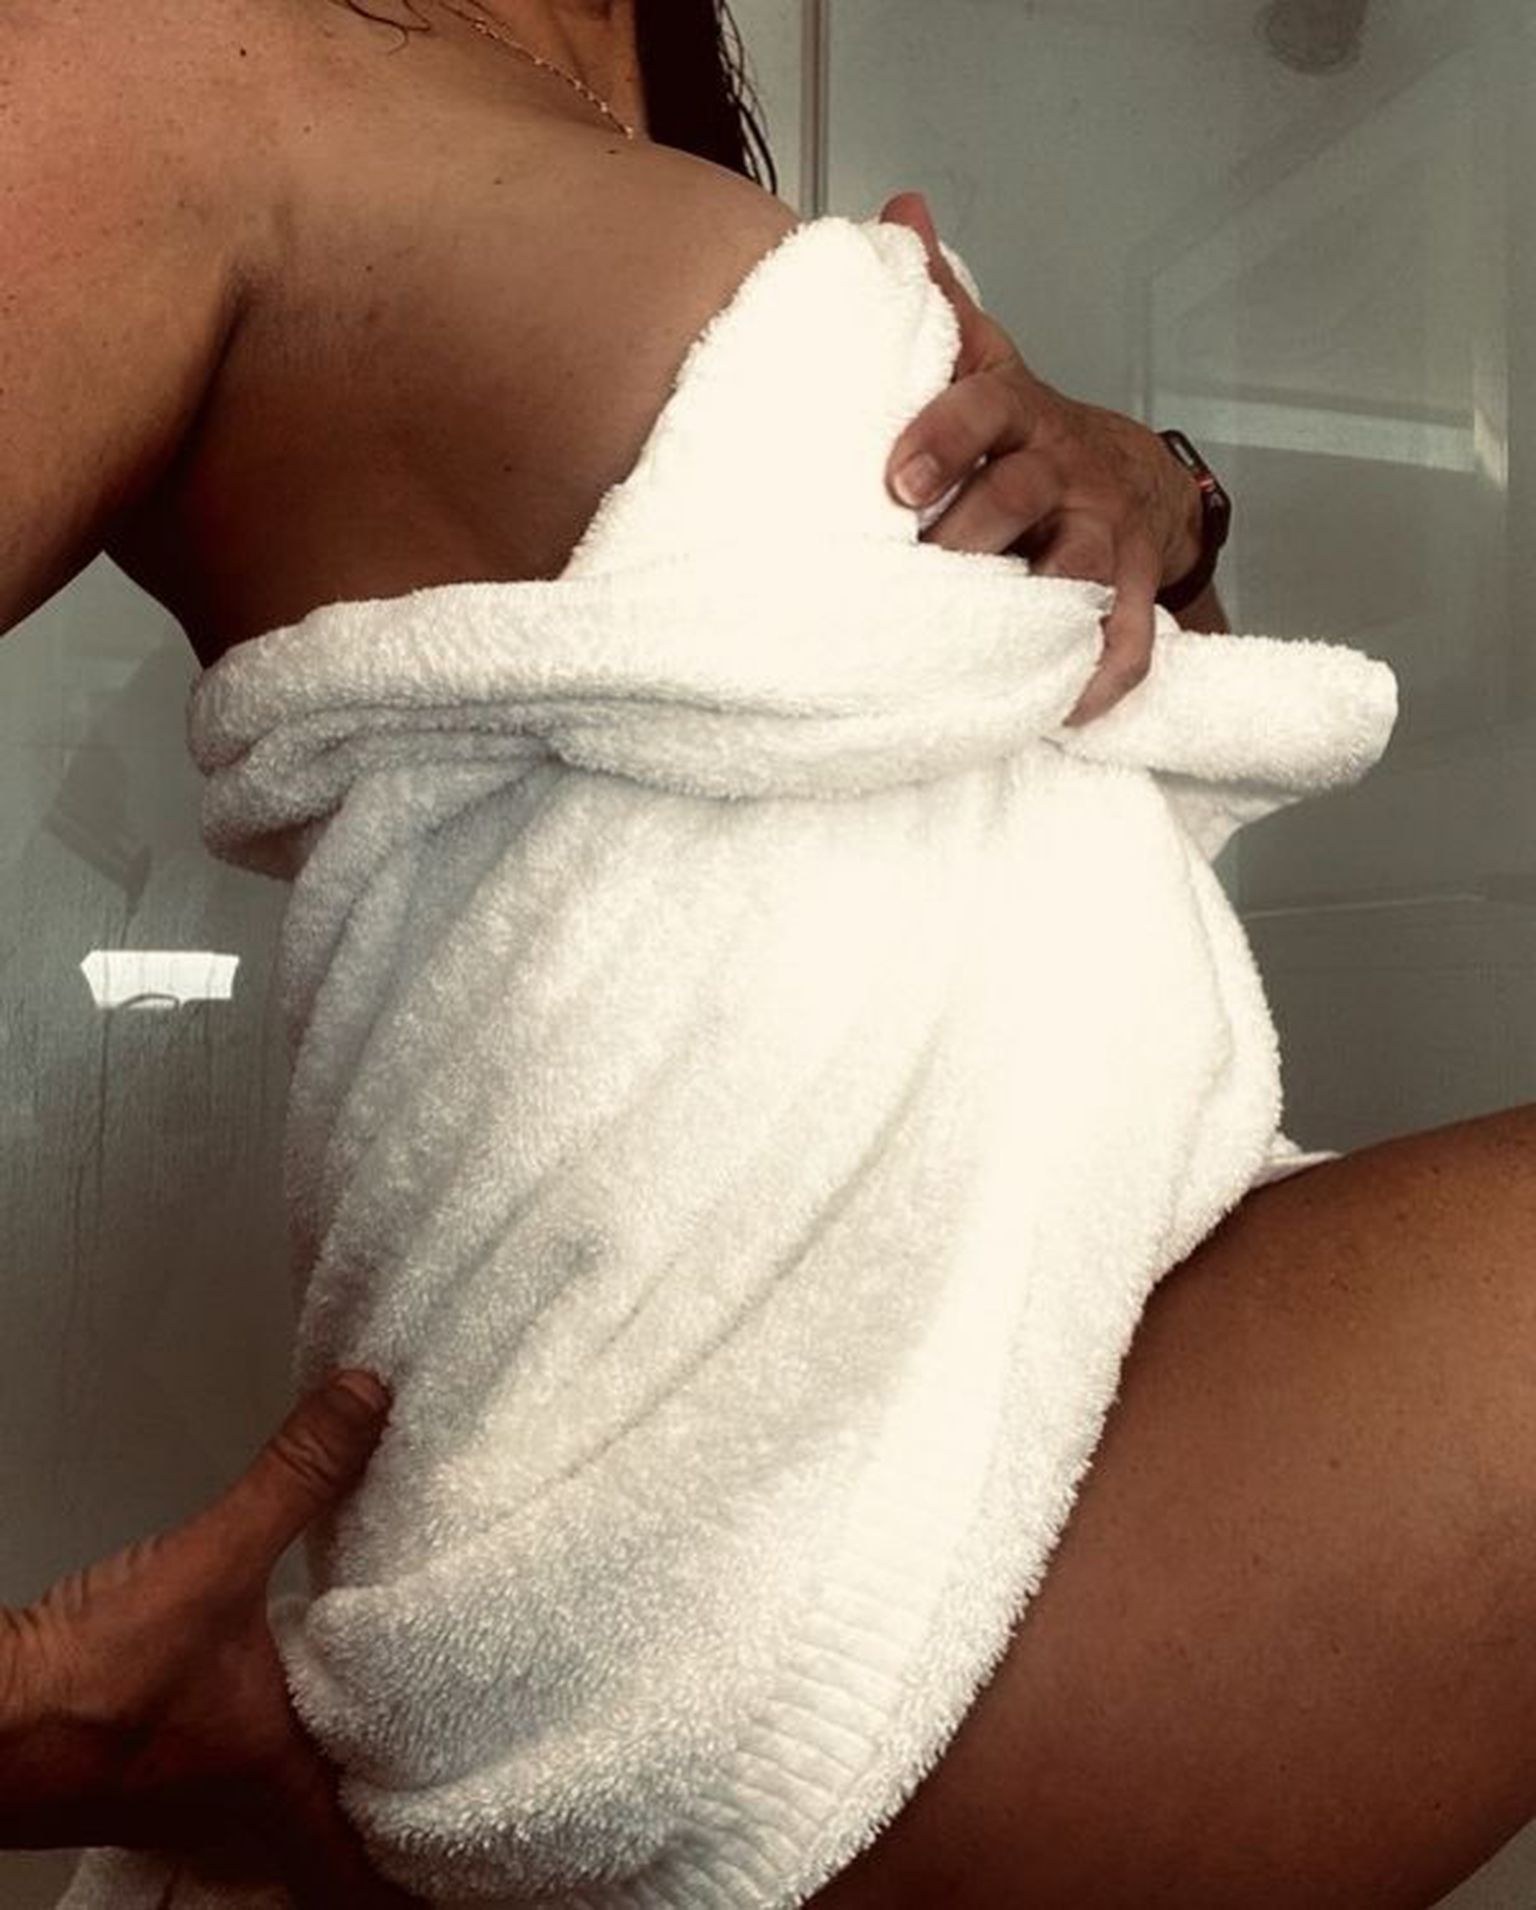 Секс после душа в полотенце (59 фото) - порно